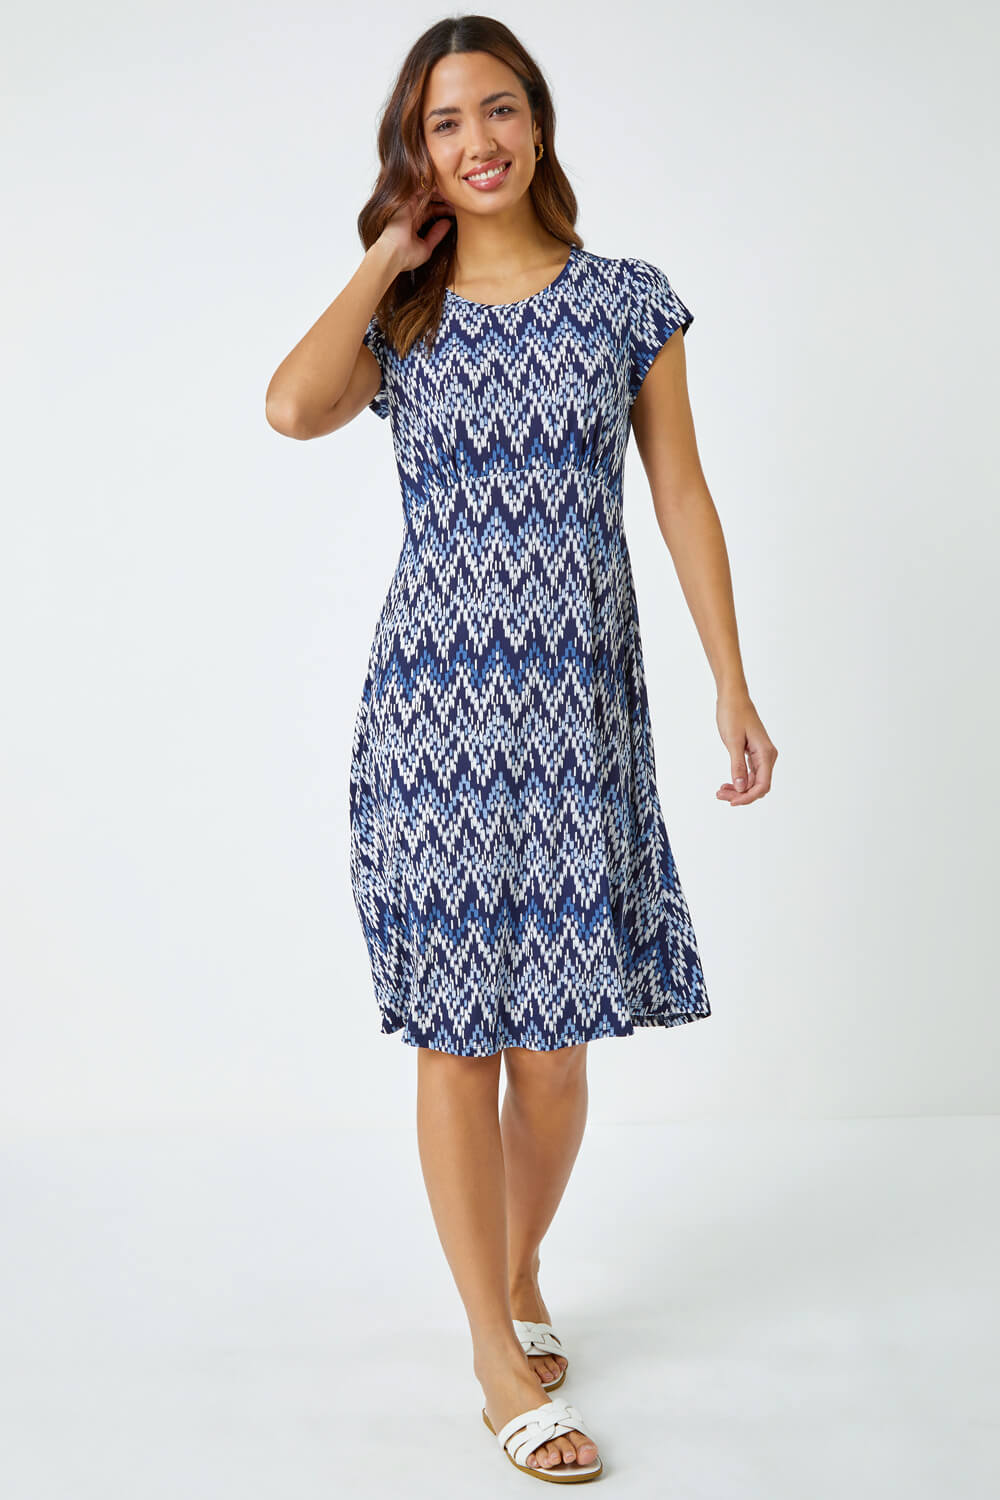 Blue Aztec Print Textured Stretch Dress, Image 4 of 5